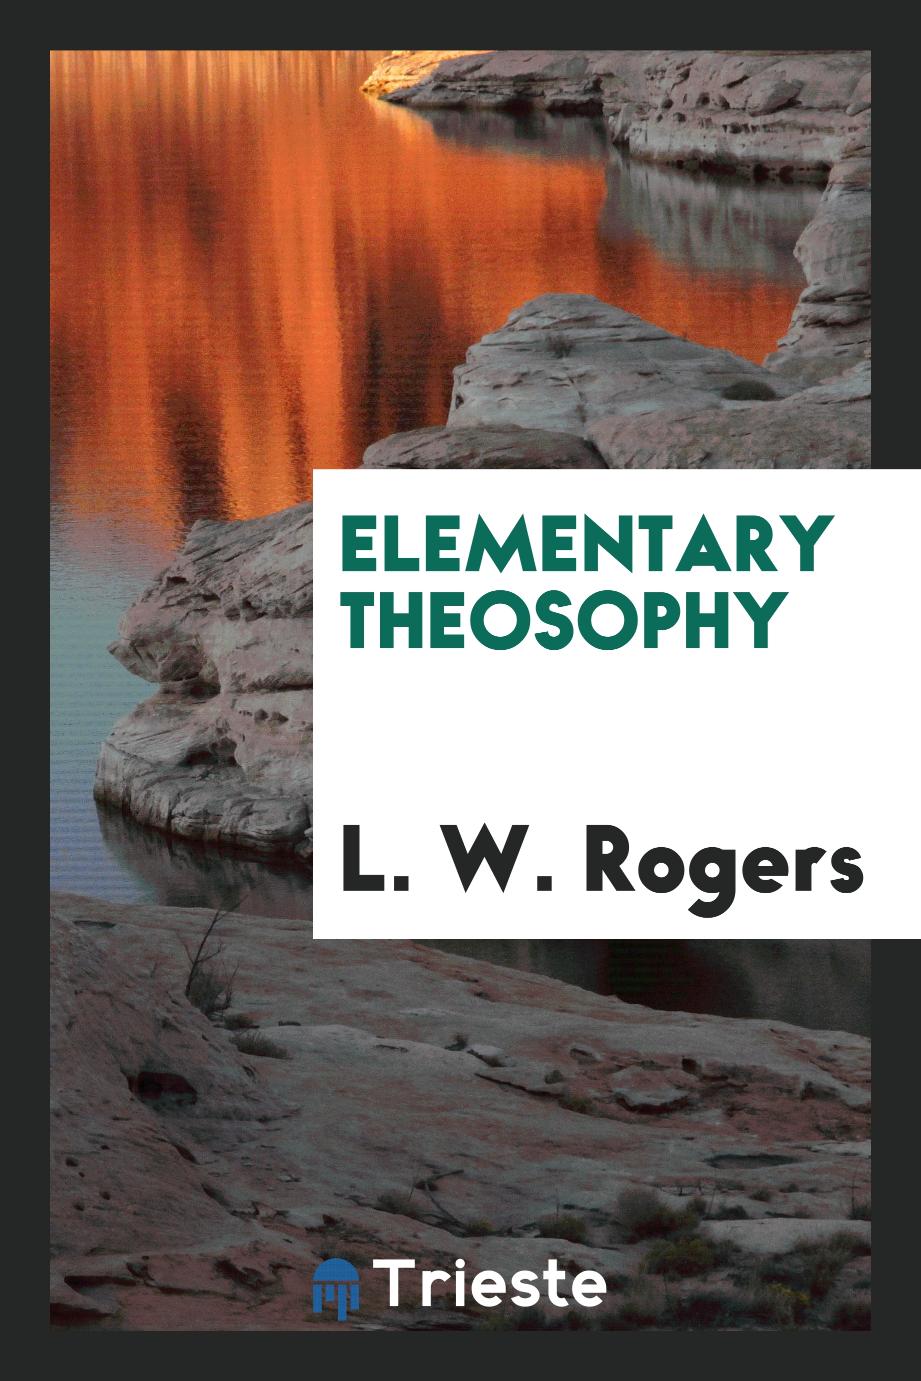 Elementary theosophy